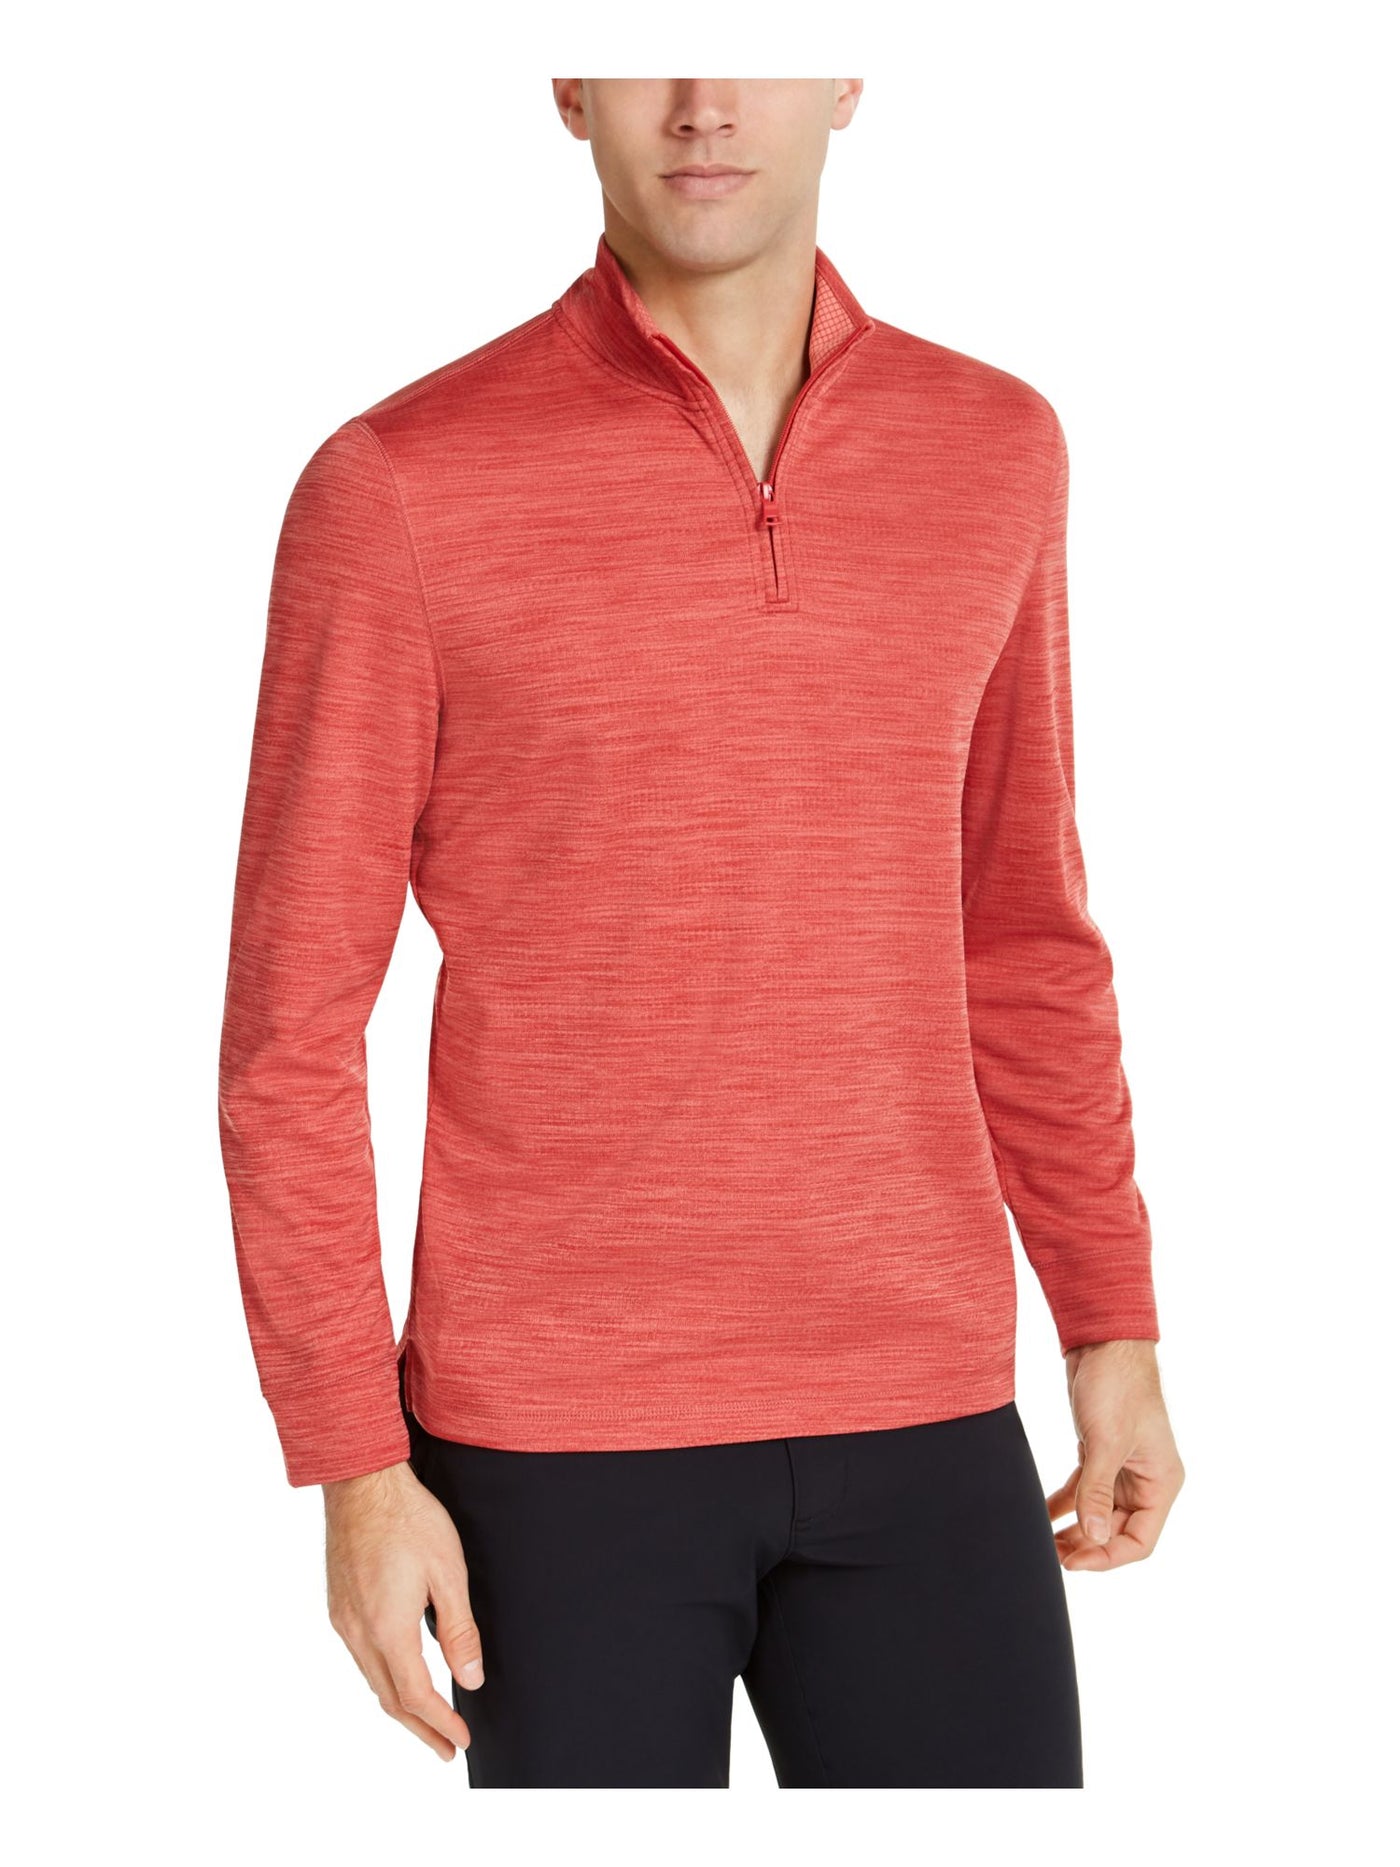 CLUBROOM PERFORMANCE Mens Red Printed Collared Quarter-Zip Sweatshirt XXL